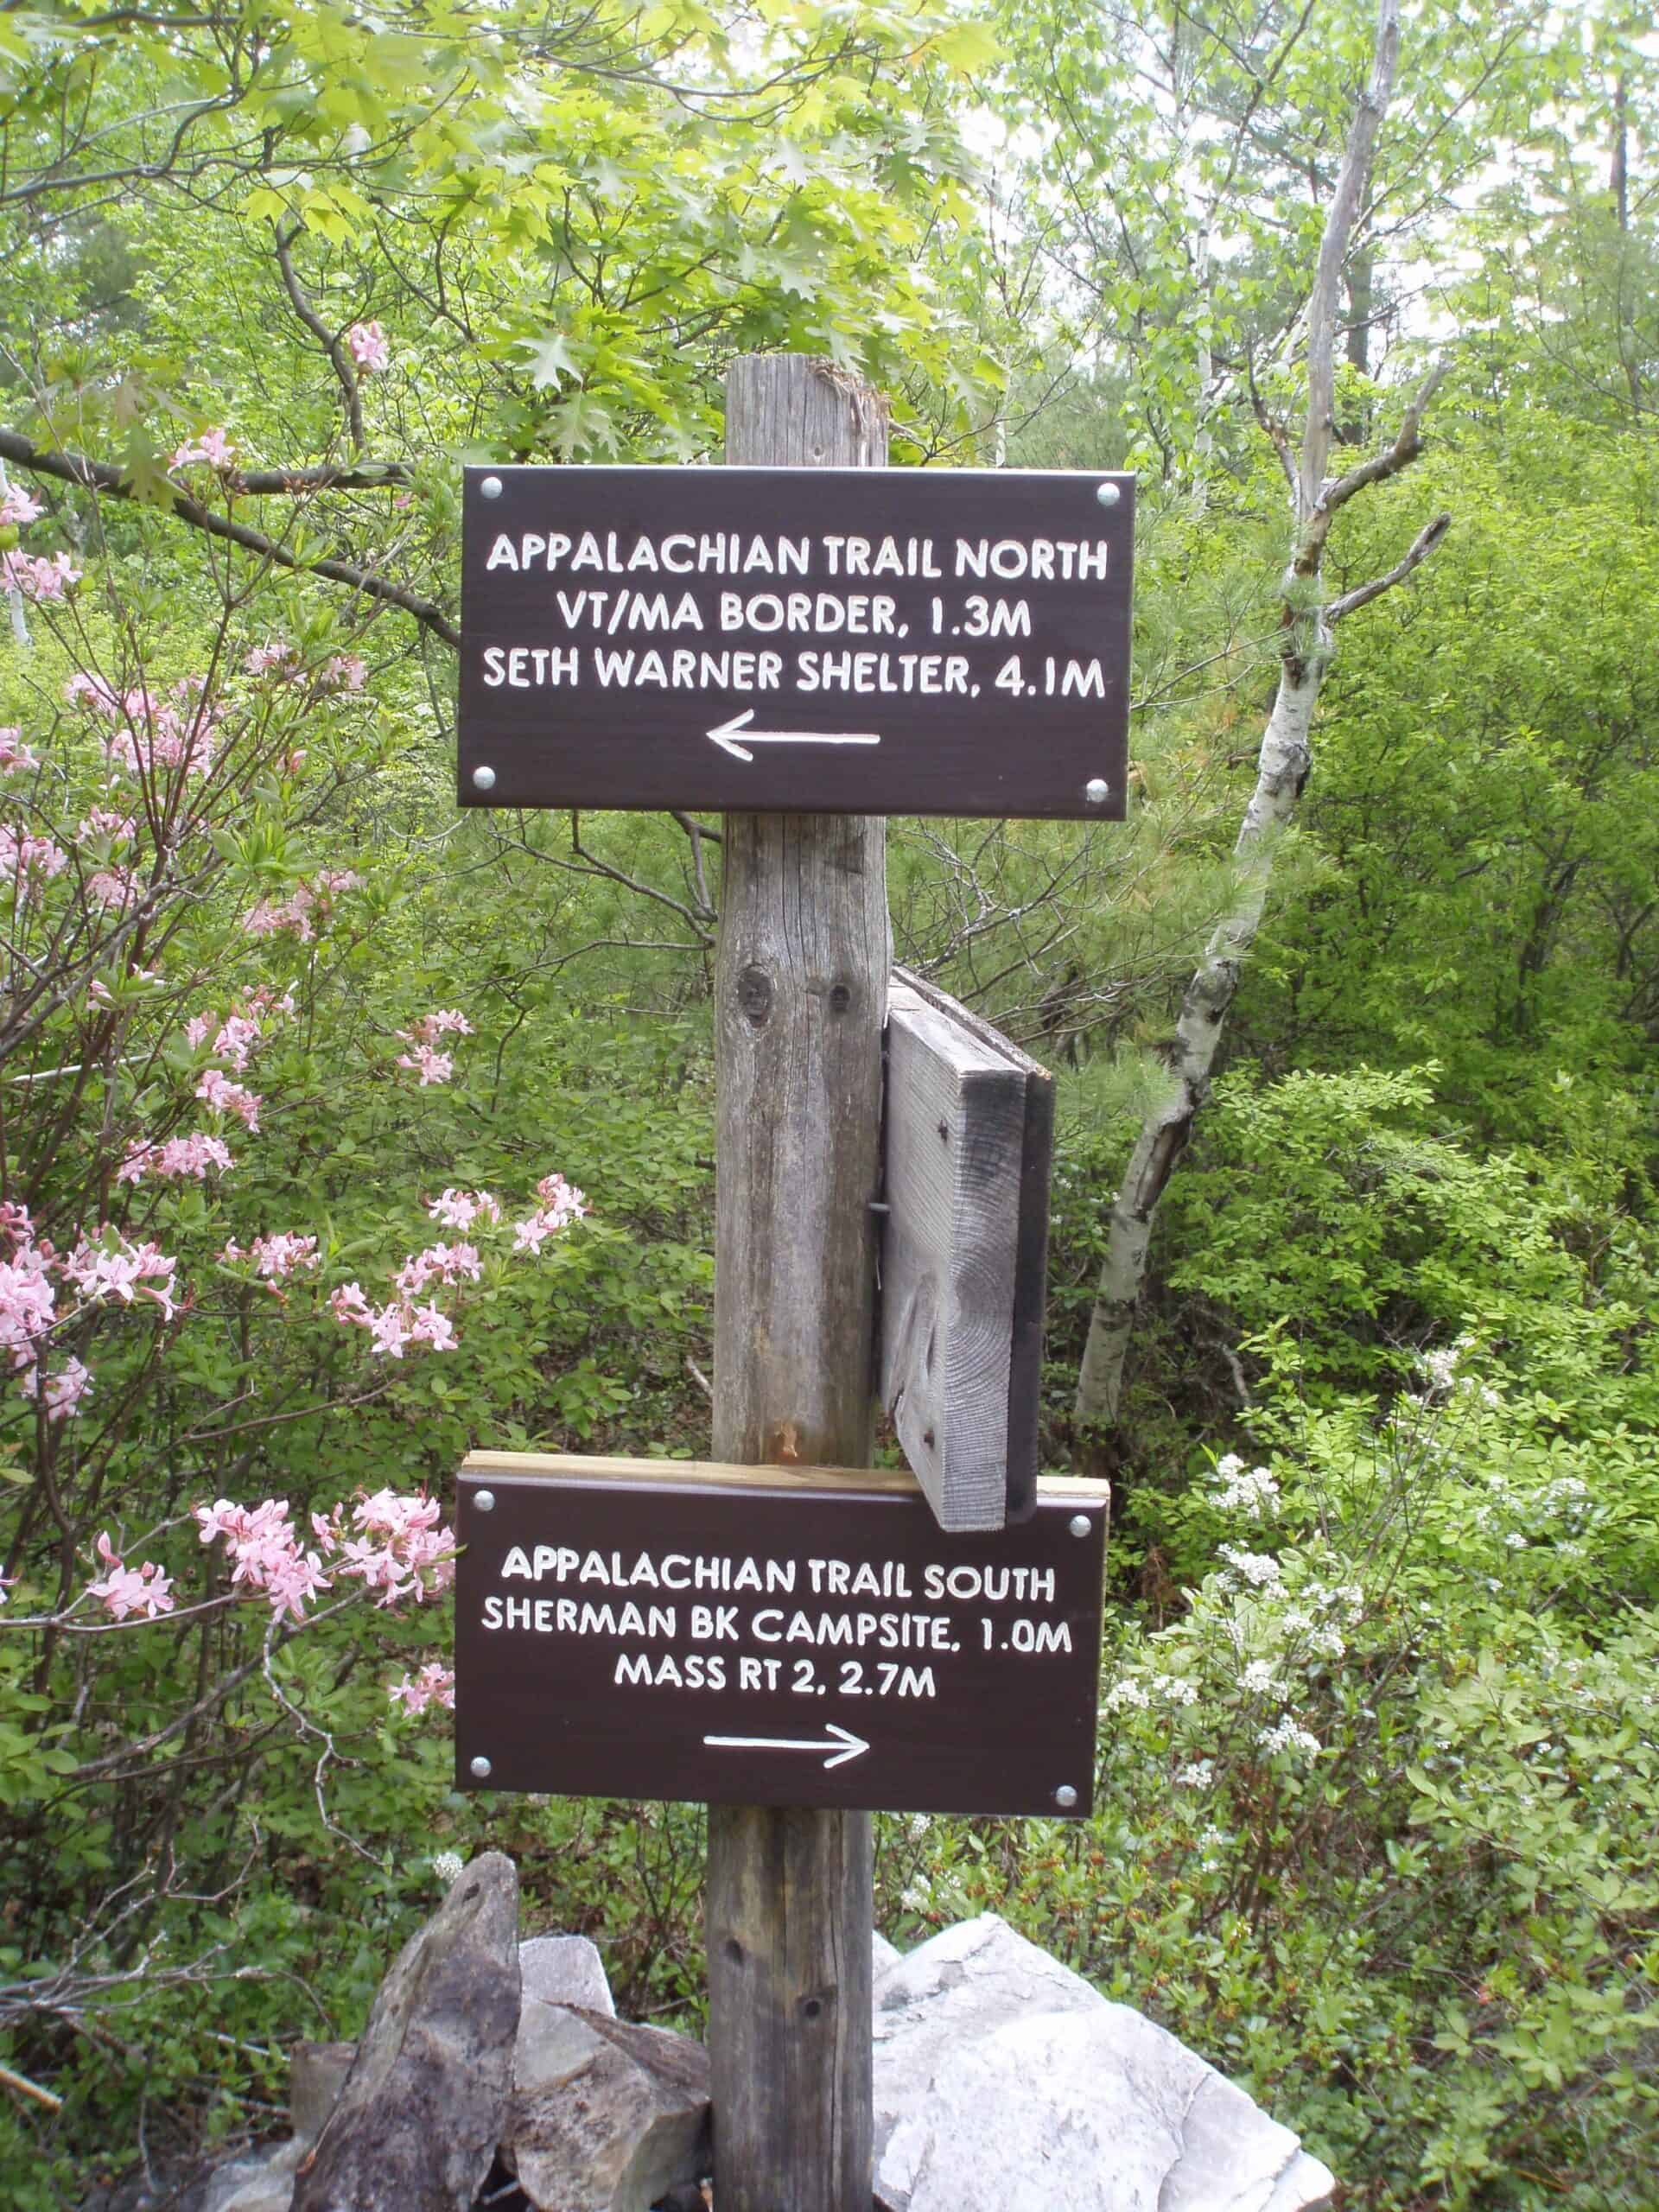 Managing the Appalachian Trail